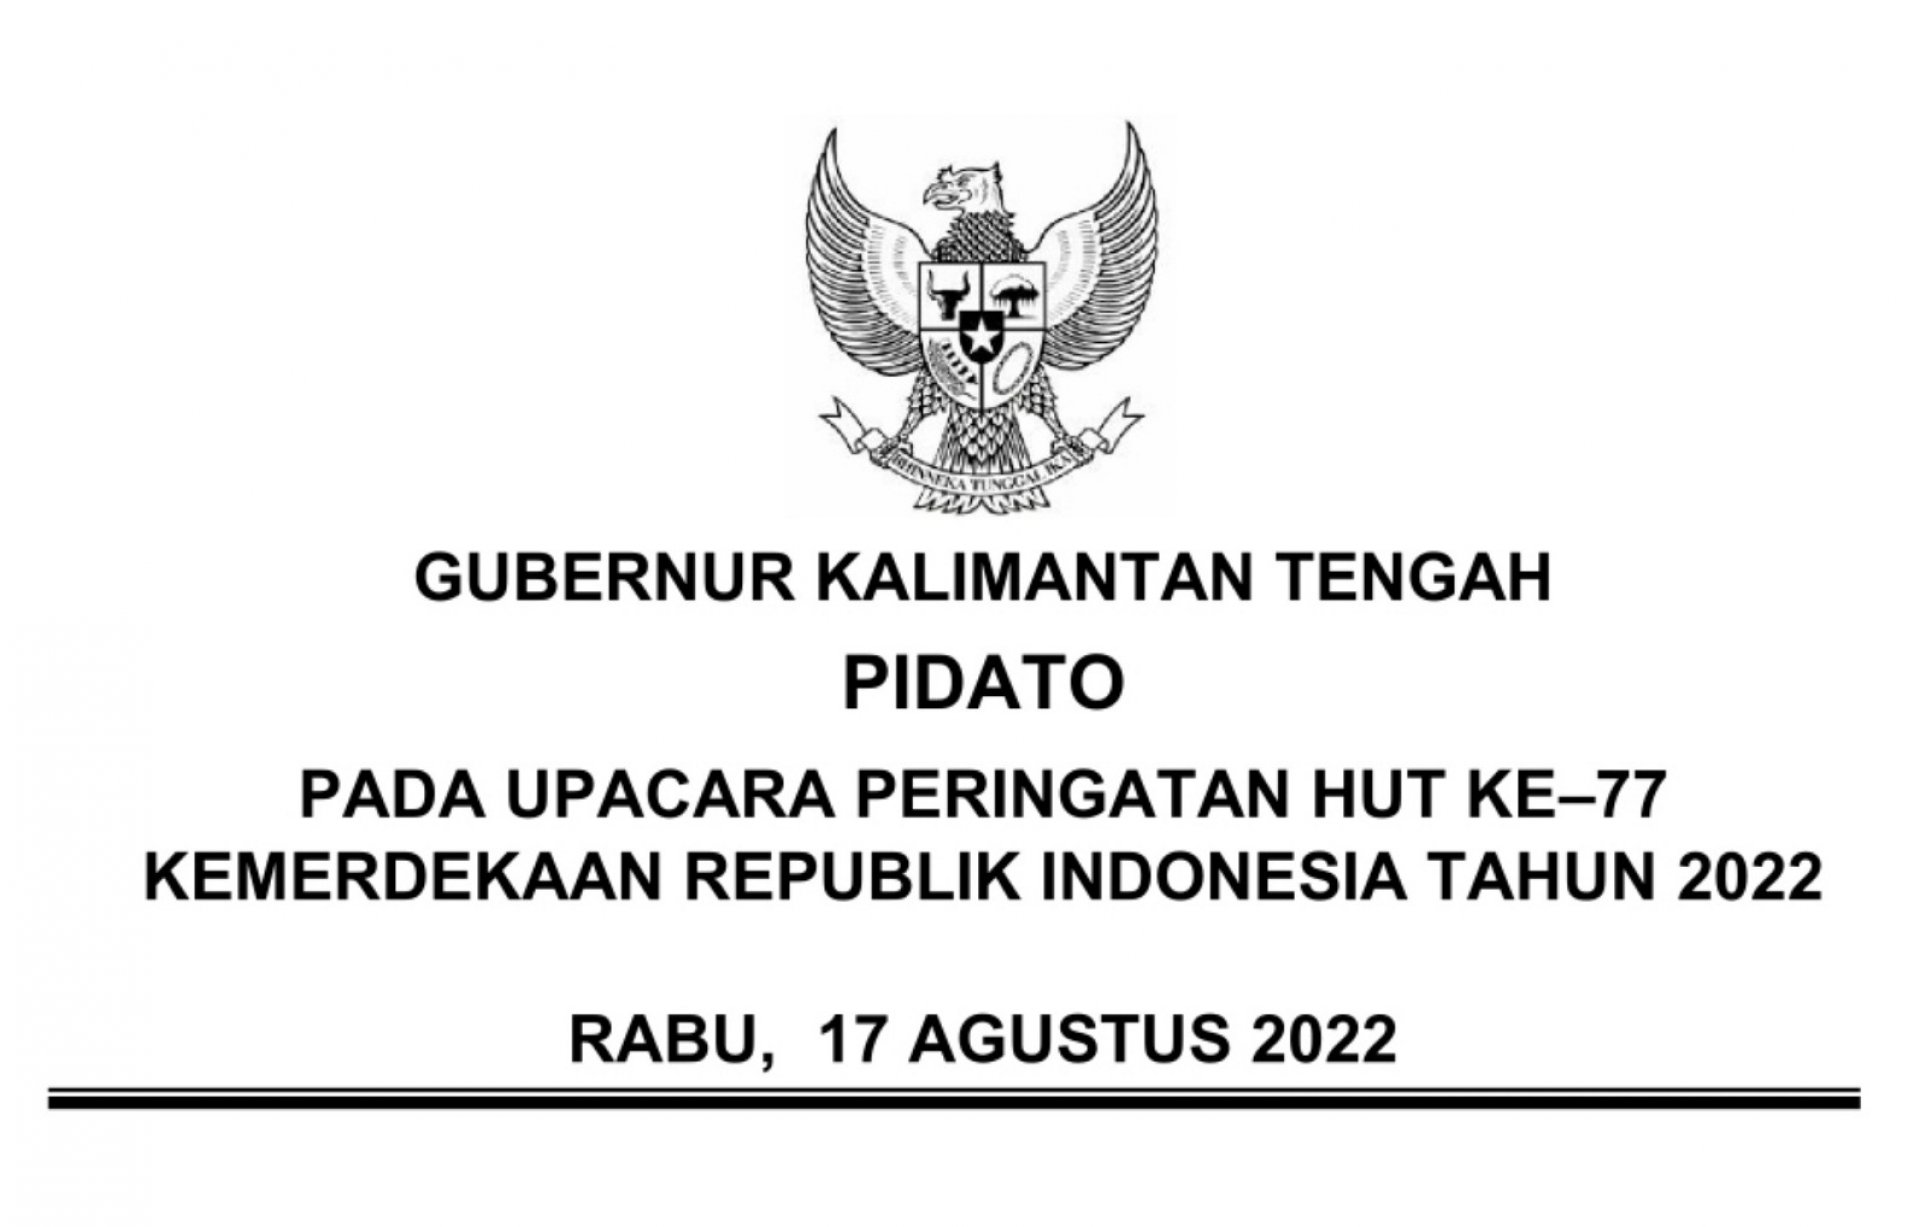 Sambutan Gubernur Kalimantan Tengah dalam rangka Peringatan HUT ke-77 Kemerdekaan Republik Indonesia